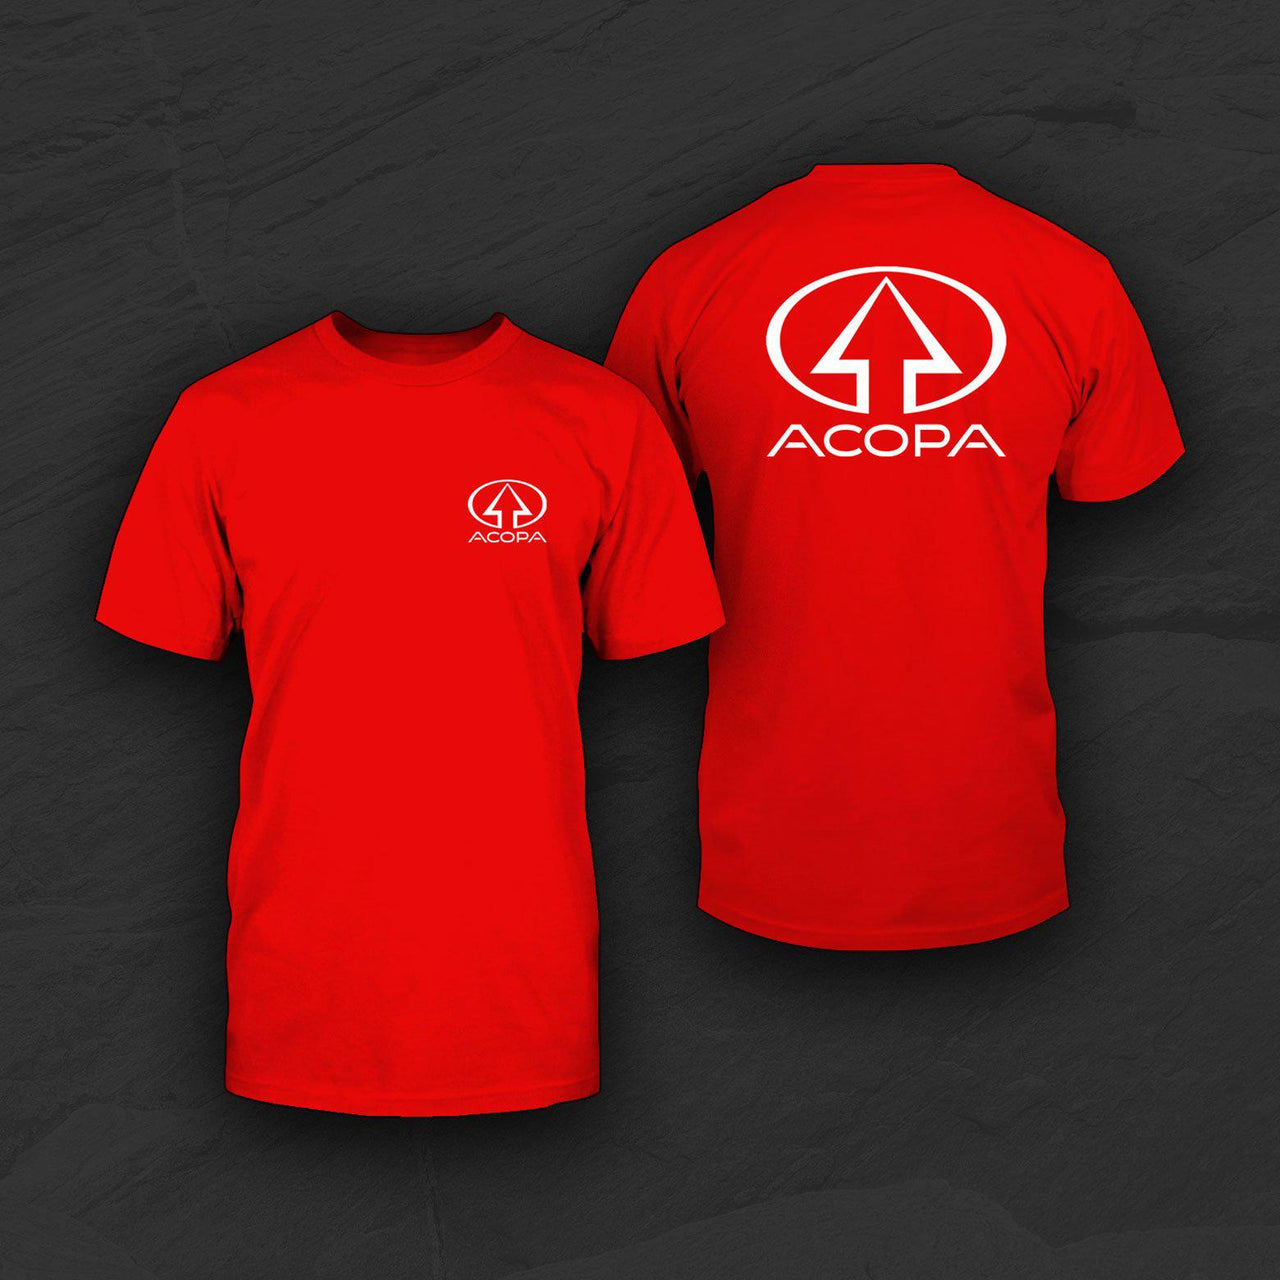 Acopa T-Shirt, Red, White Logo